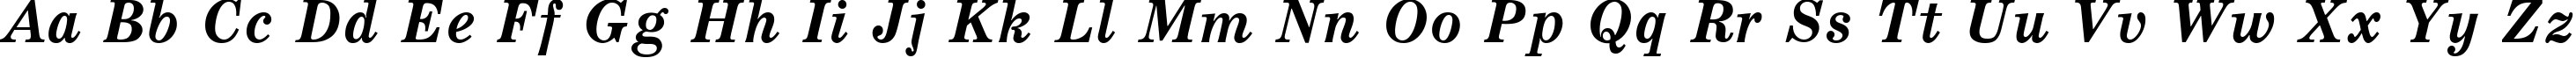 Пример написания английского алфавита шрифтом School Bold Italic:001.001